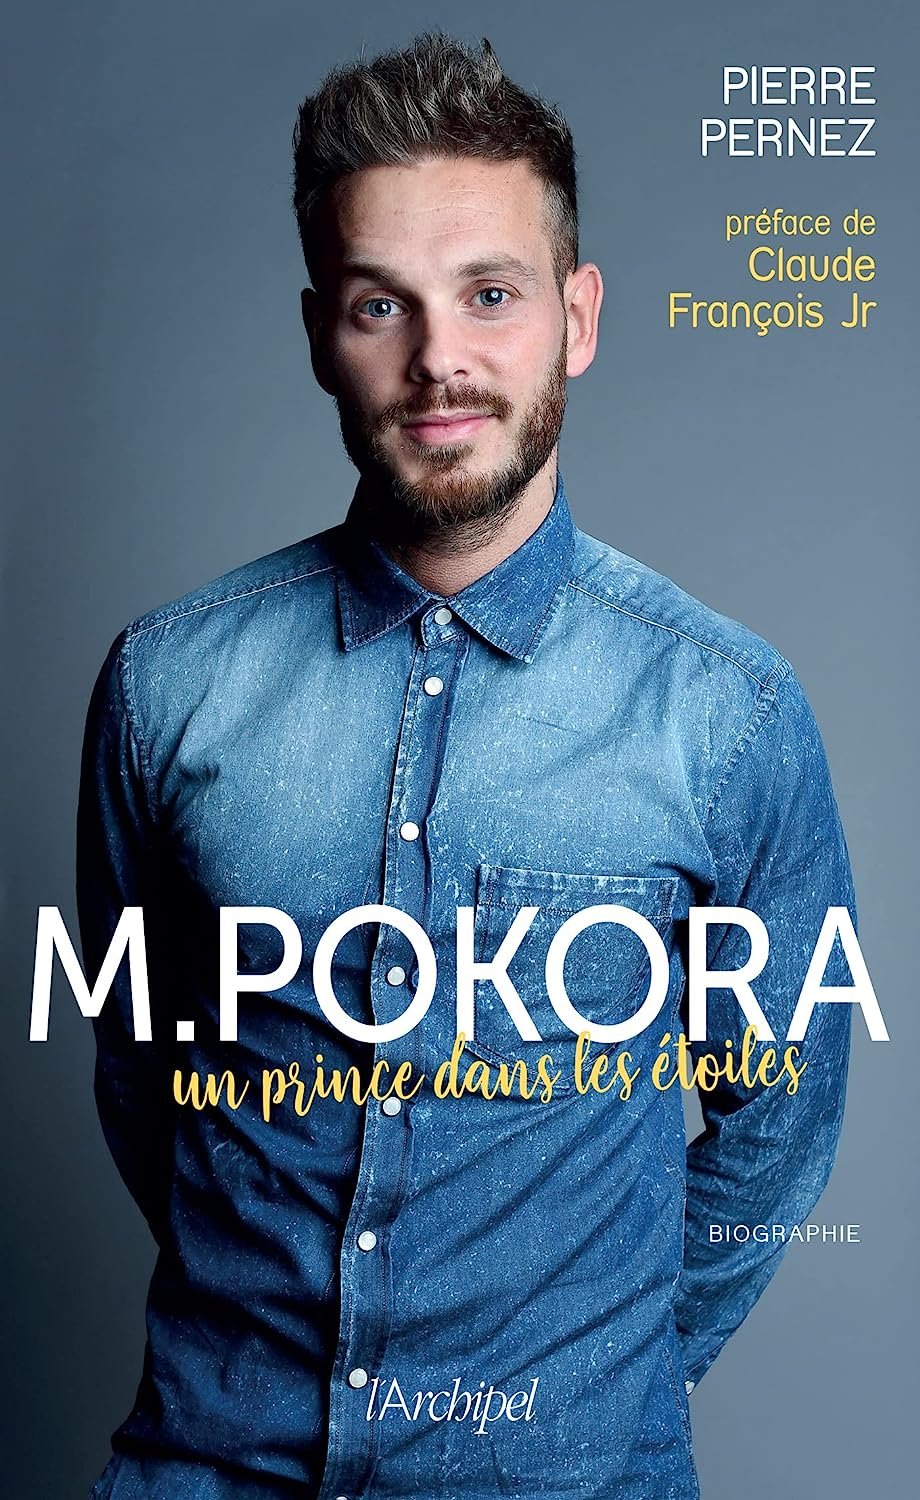 Pierre Pernez - M.Pokora, la success story